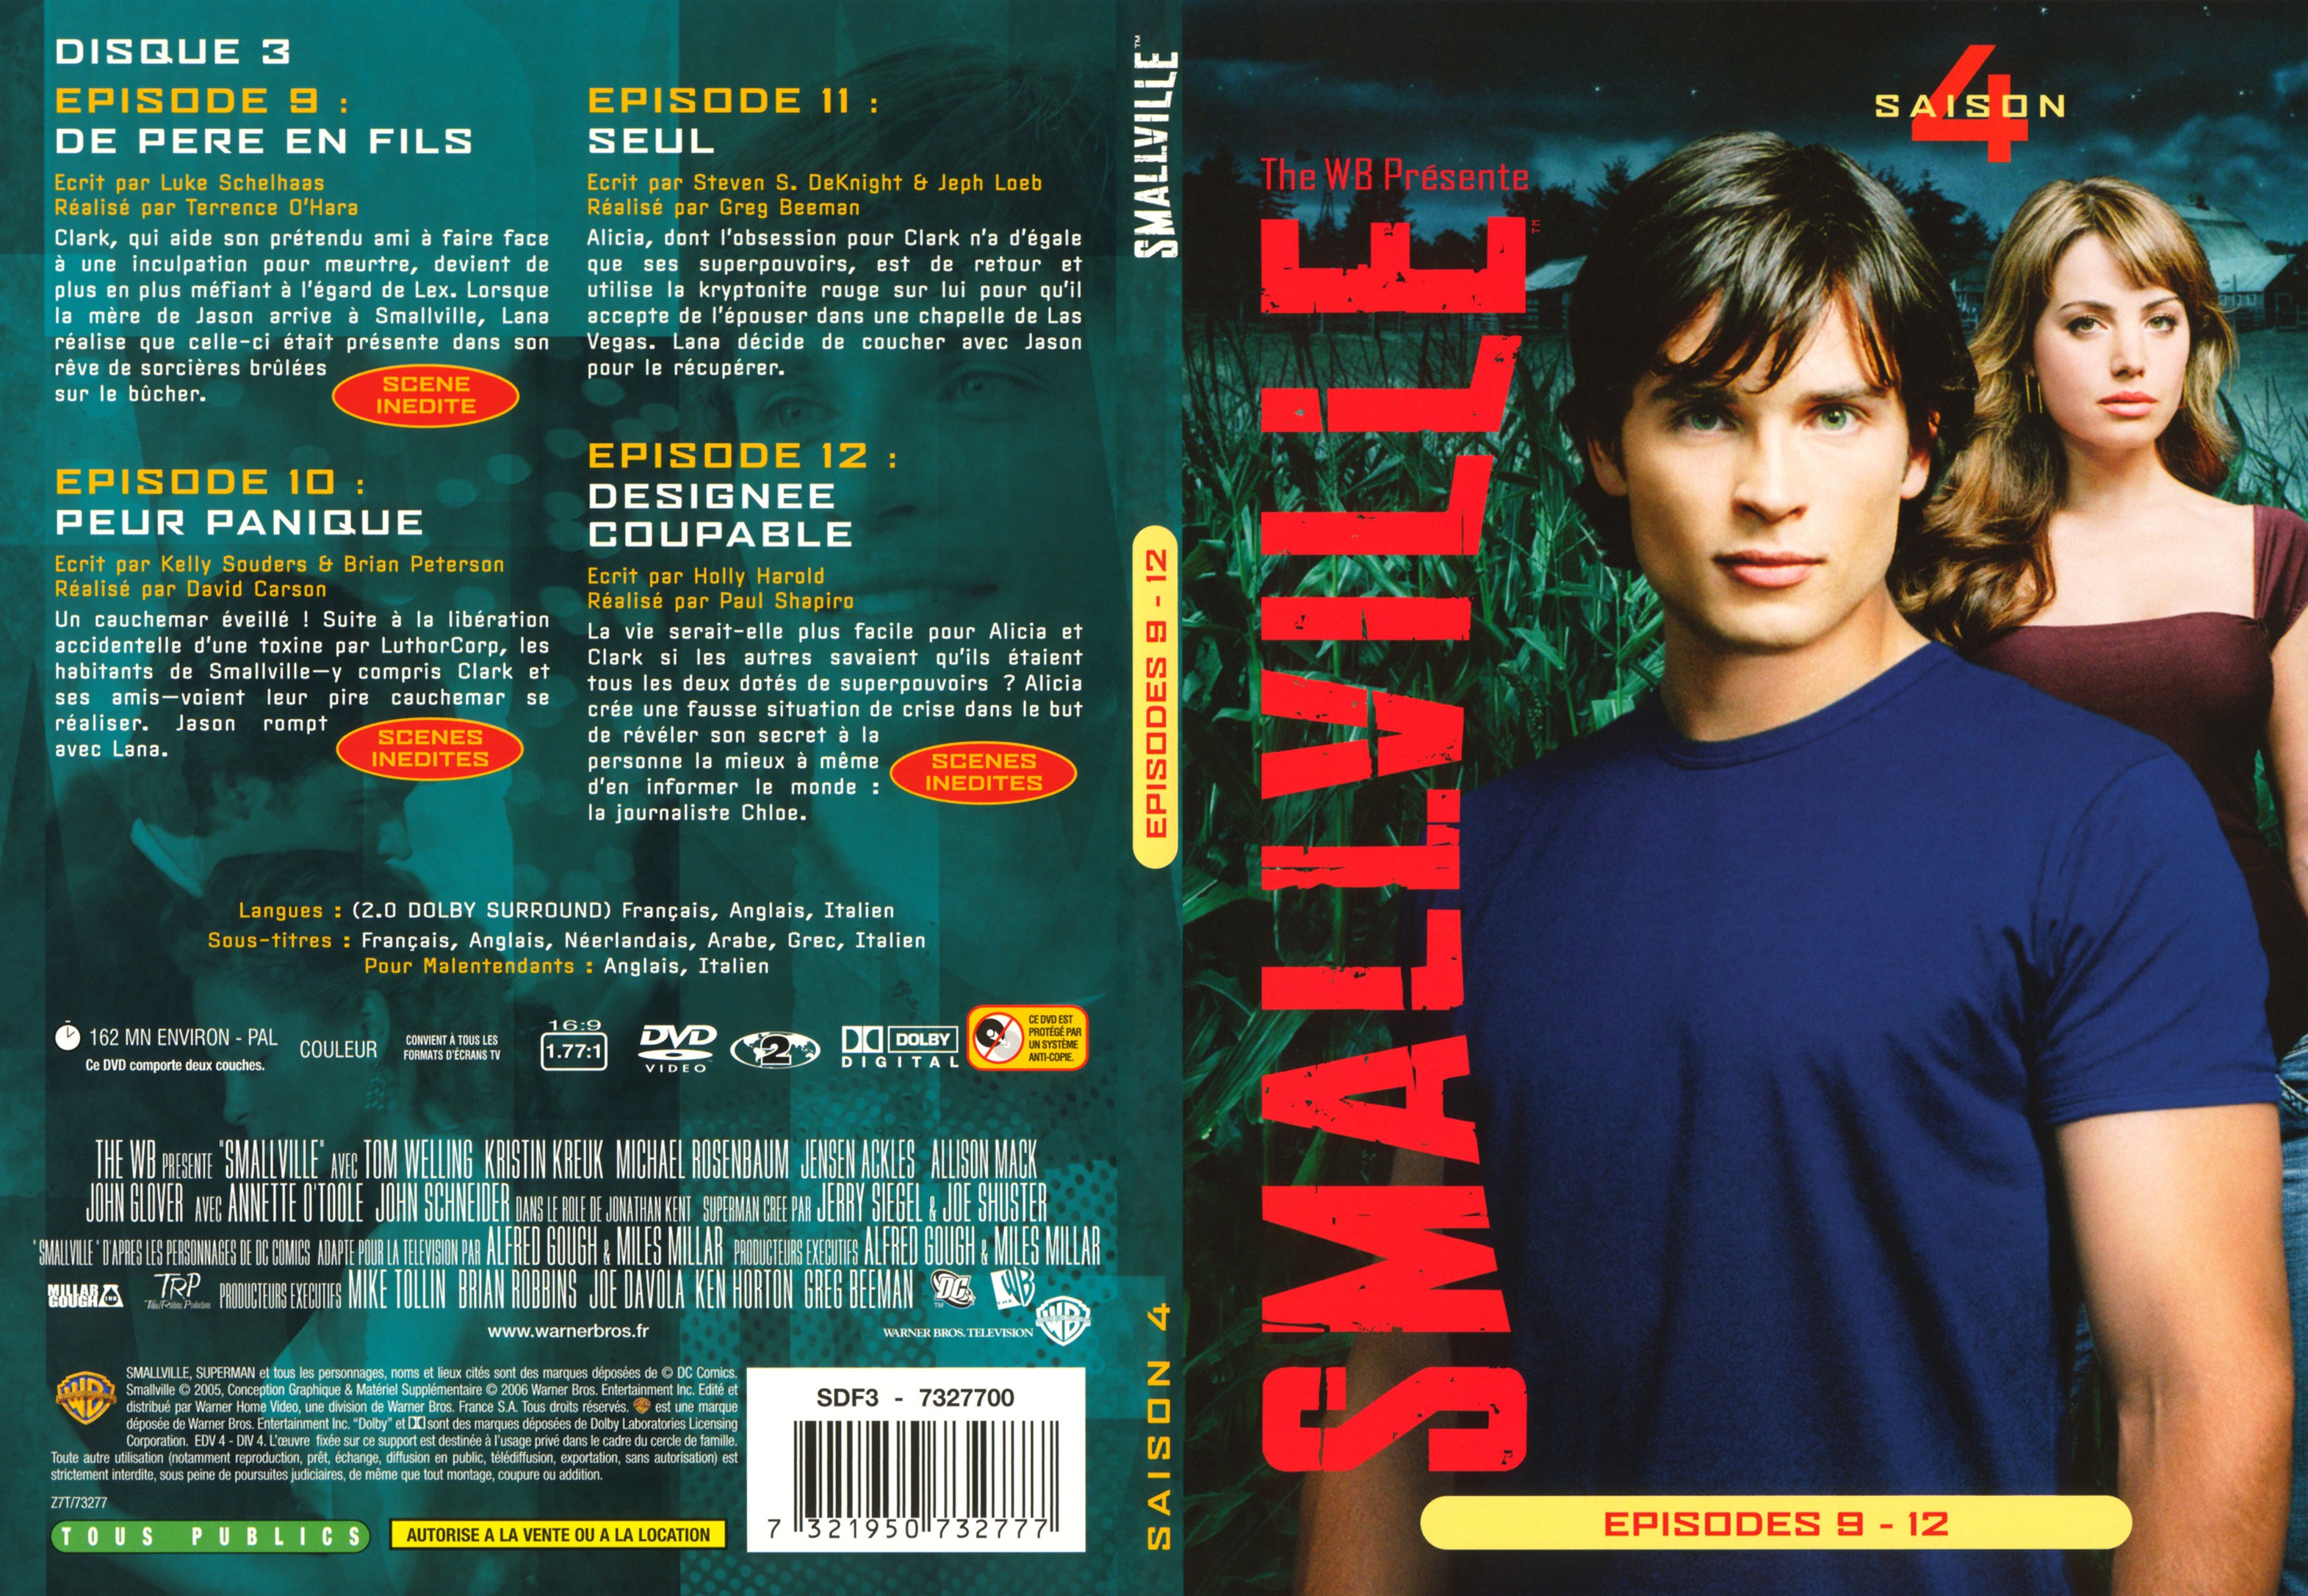 Jaquette DVD Smallville saison 4 DVD 3